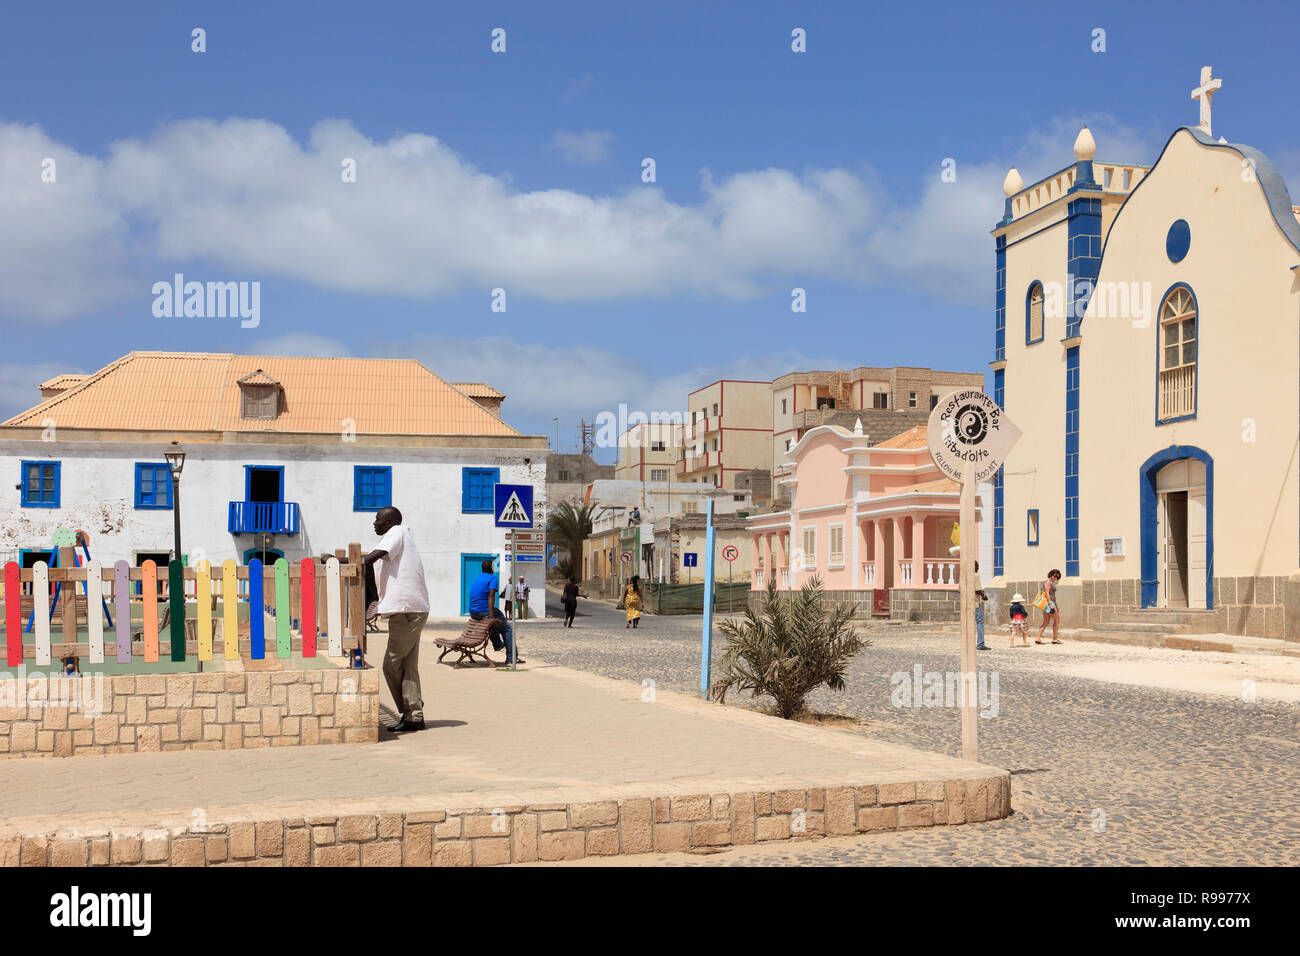 Scene in main square with cobbled street and catholic Church of St Isobel. Largo Santa Isobel, Sal Rei, Boa Vista, Cape Verde Islands, Africa Stock Photo